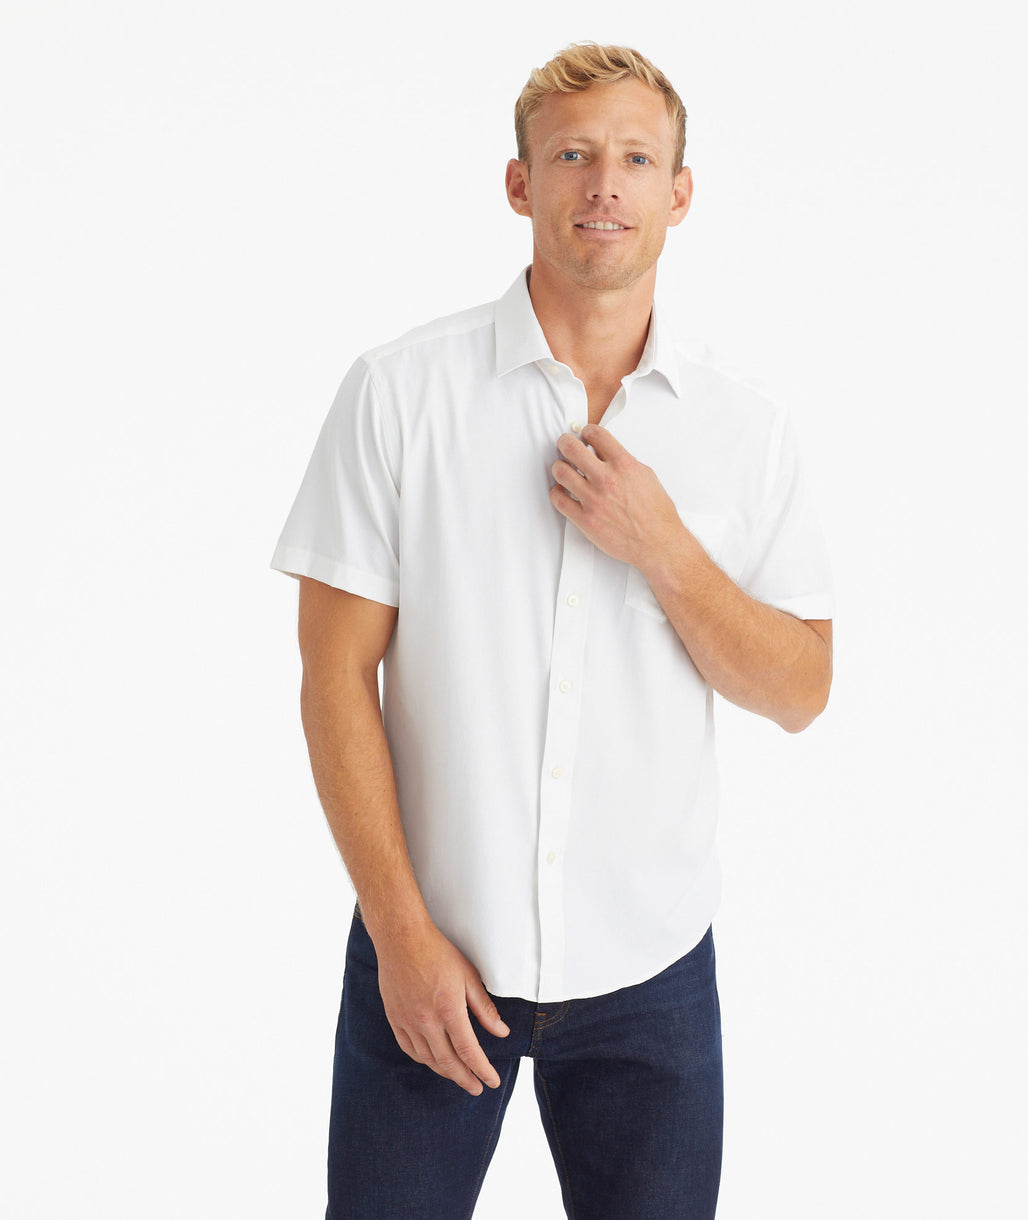 Model wearing an UNTUCKit White Wrinkle-Free Performance Short Sleeve Gironde Shirt